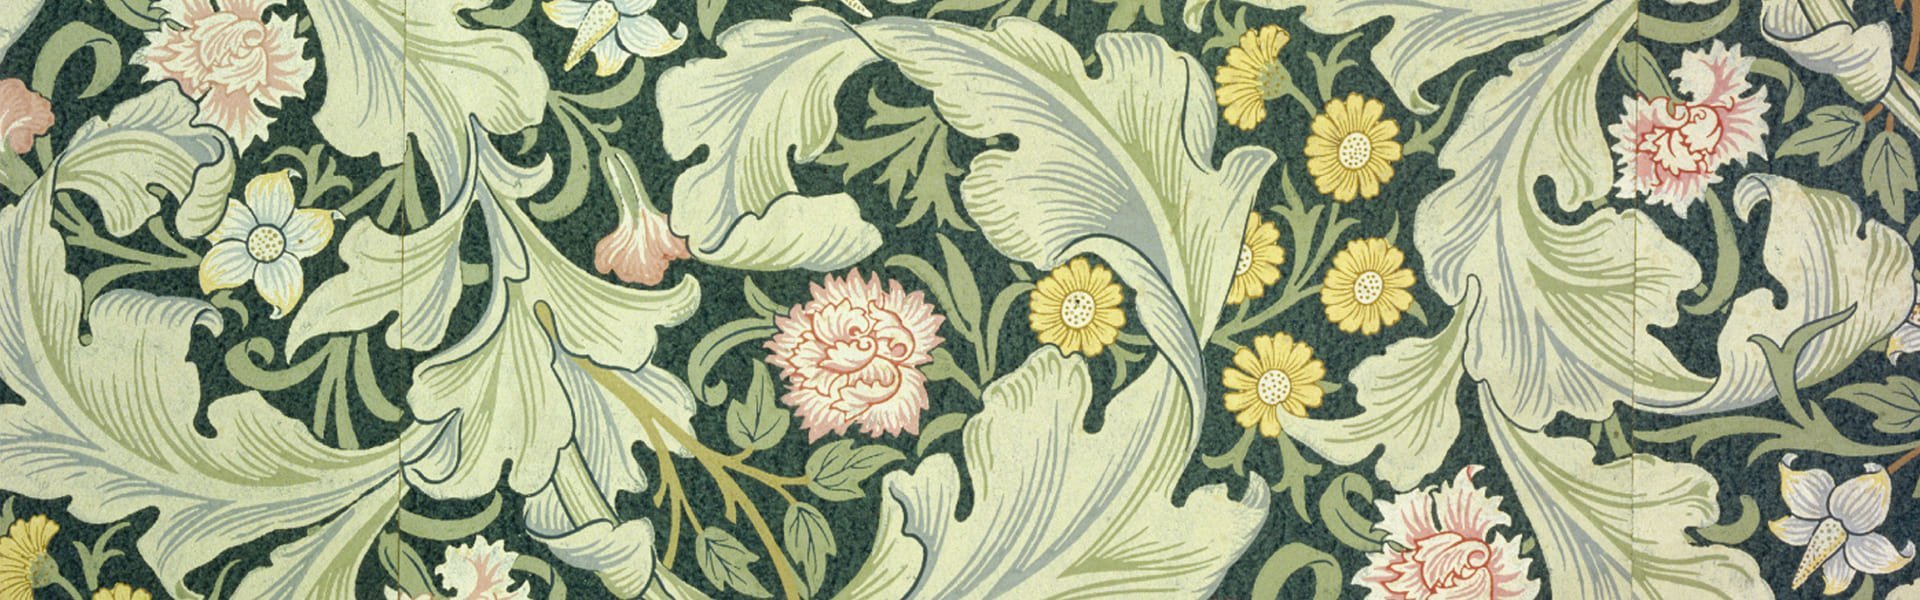 Behang naar ontwerp van William Morris, Groot-Brittannië